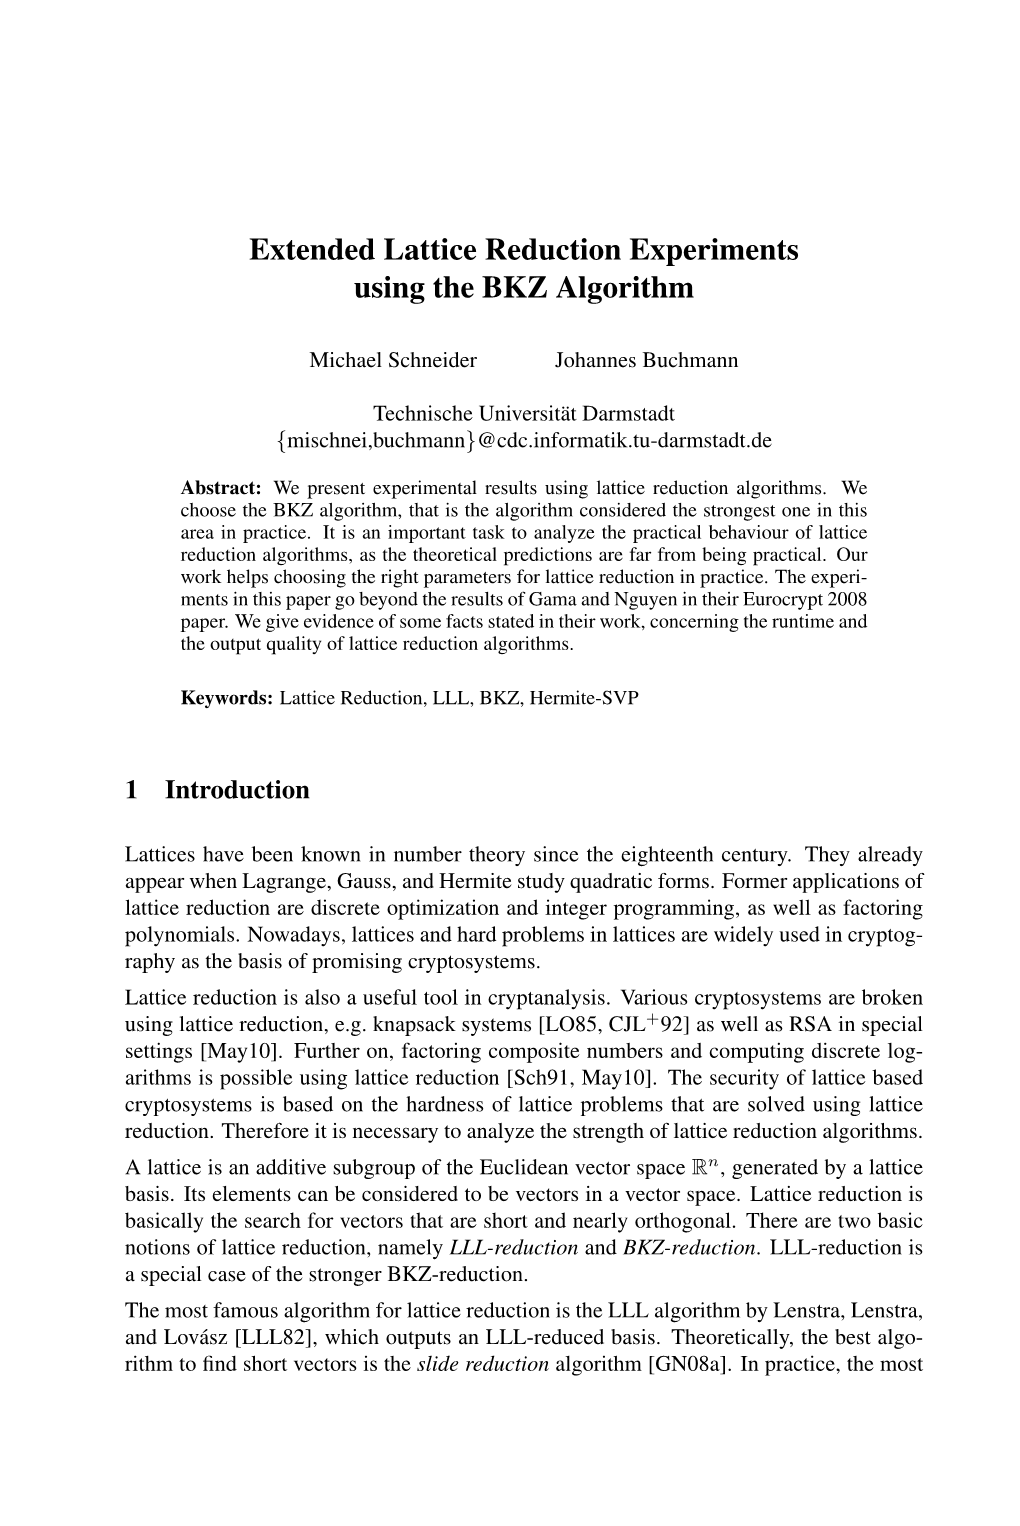 Extended Lattice Reduction Experiments Using the BKZ Algorithm